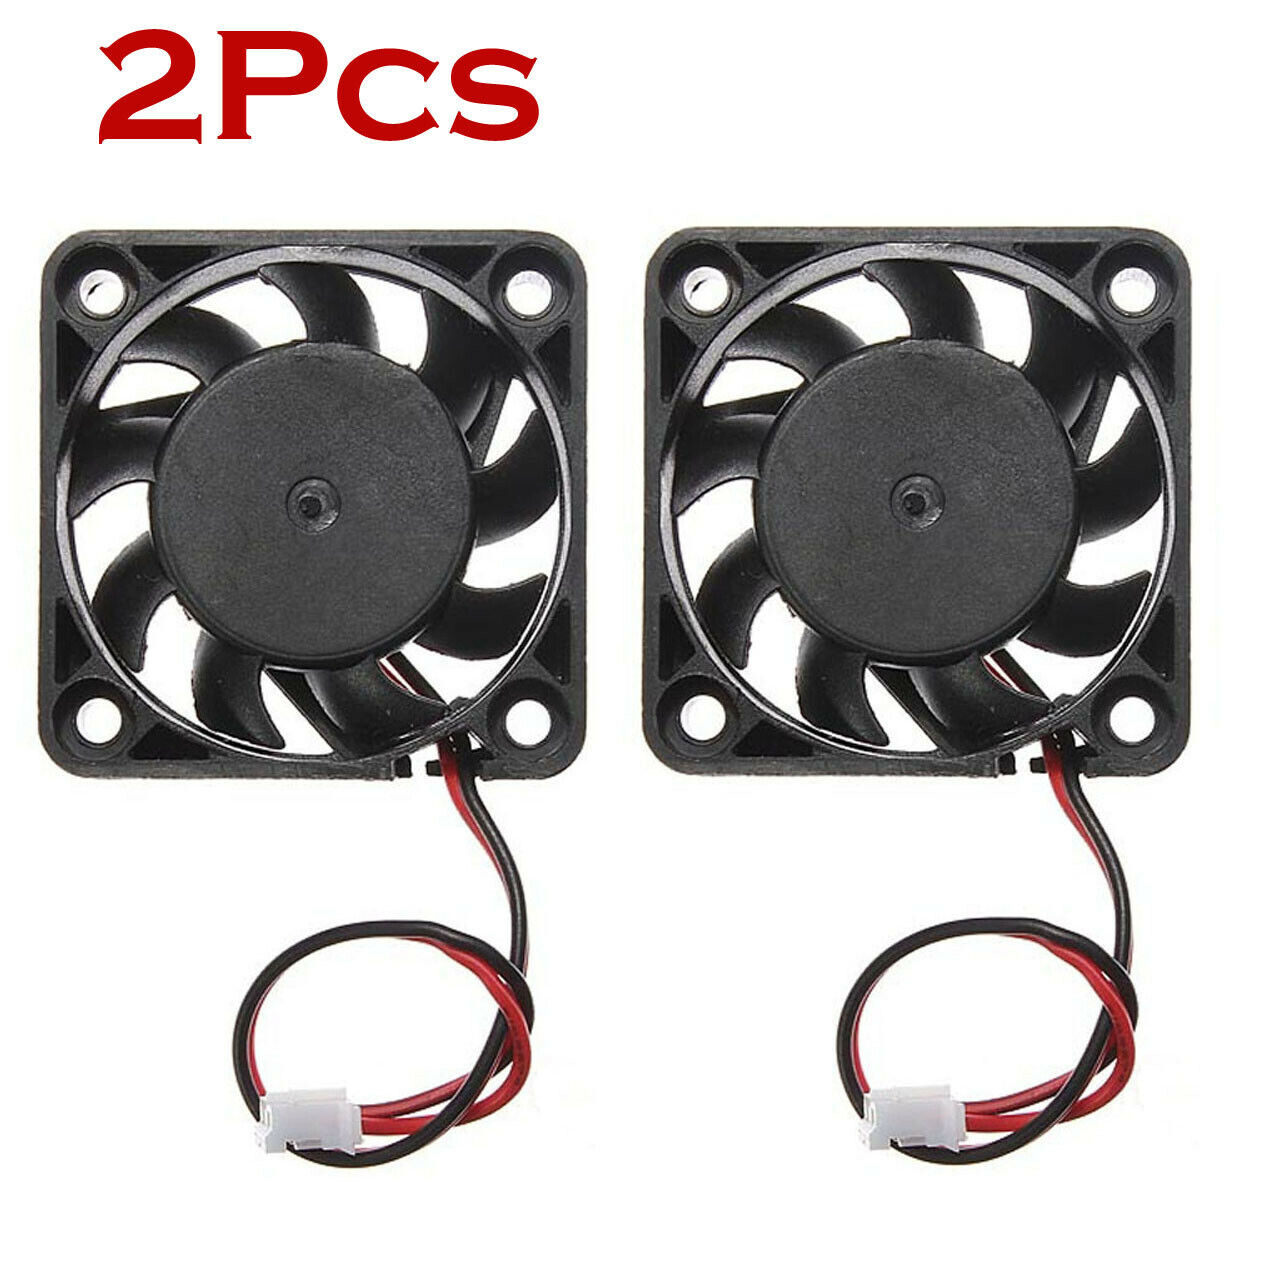 2Pcs 12V Mini Cooling Computer Fan - Small 40mm x 10mm DC Brushless 2-pin HX UU